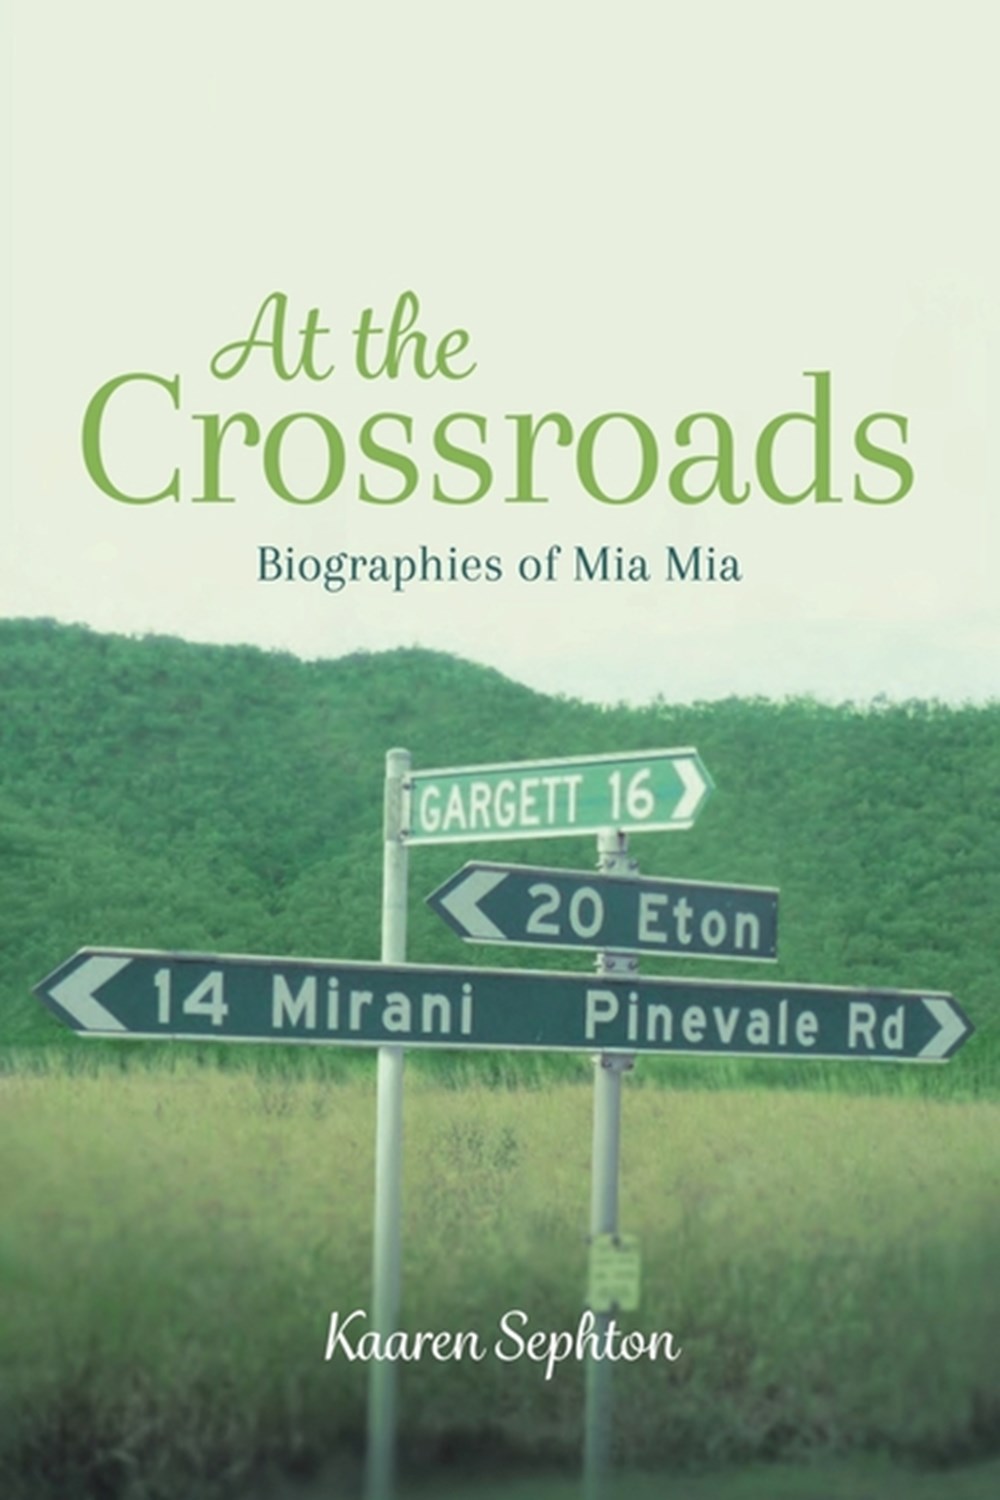 At the Crossroads: Biographies of Mia Mia